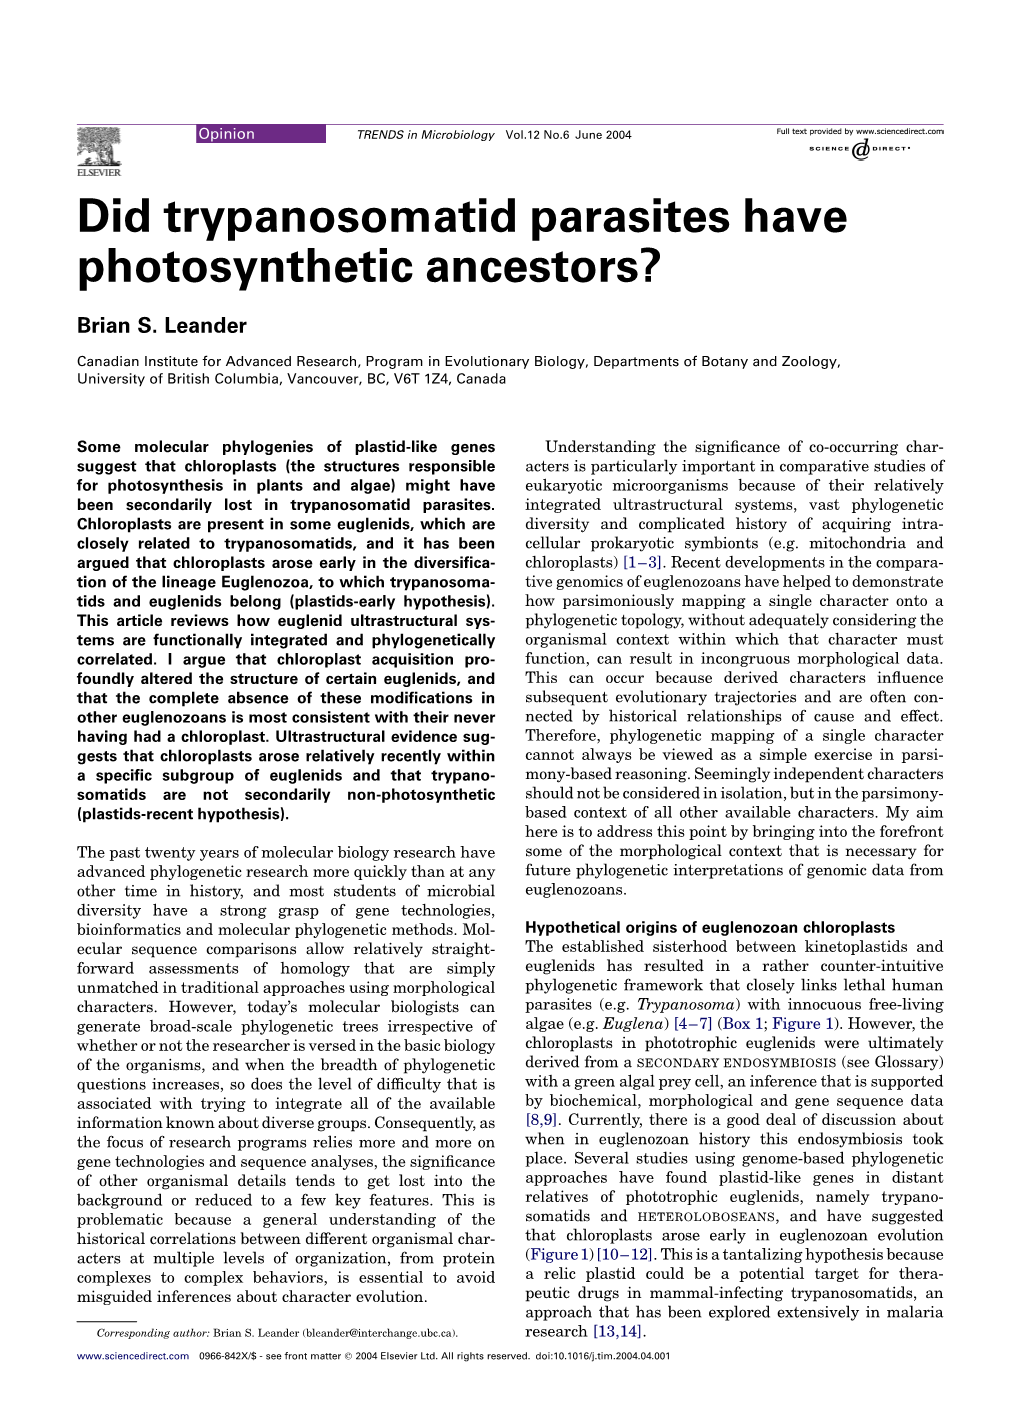 Did Trypanosomatid Parasites Have Photosynthetic Ancestors?